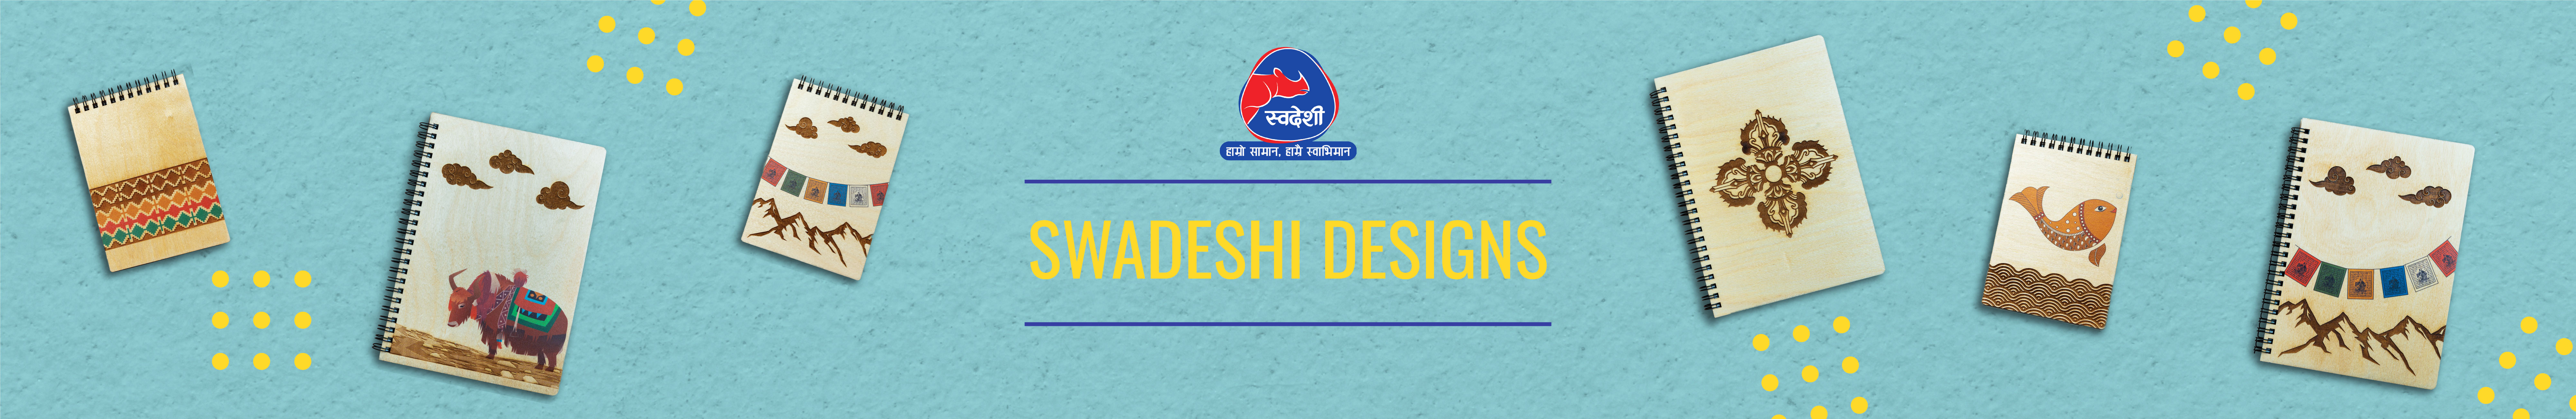 swadeshis designs 